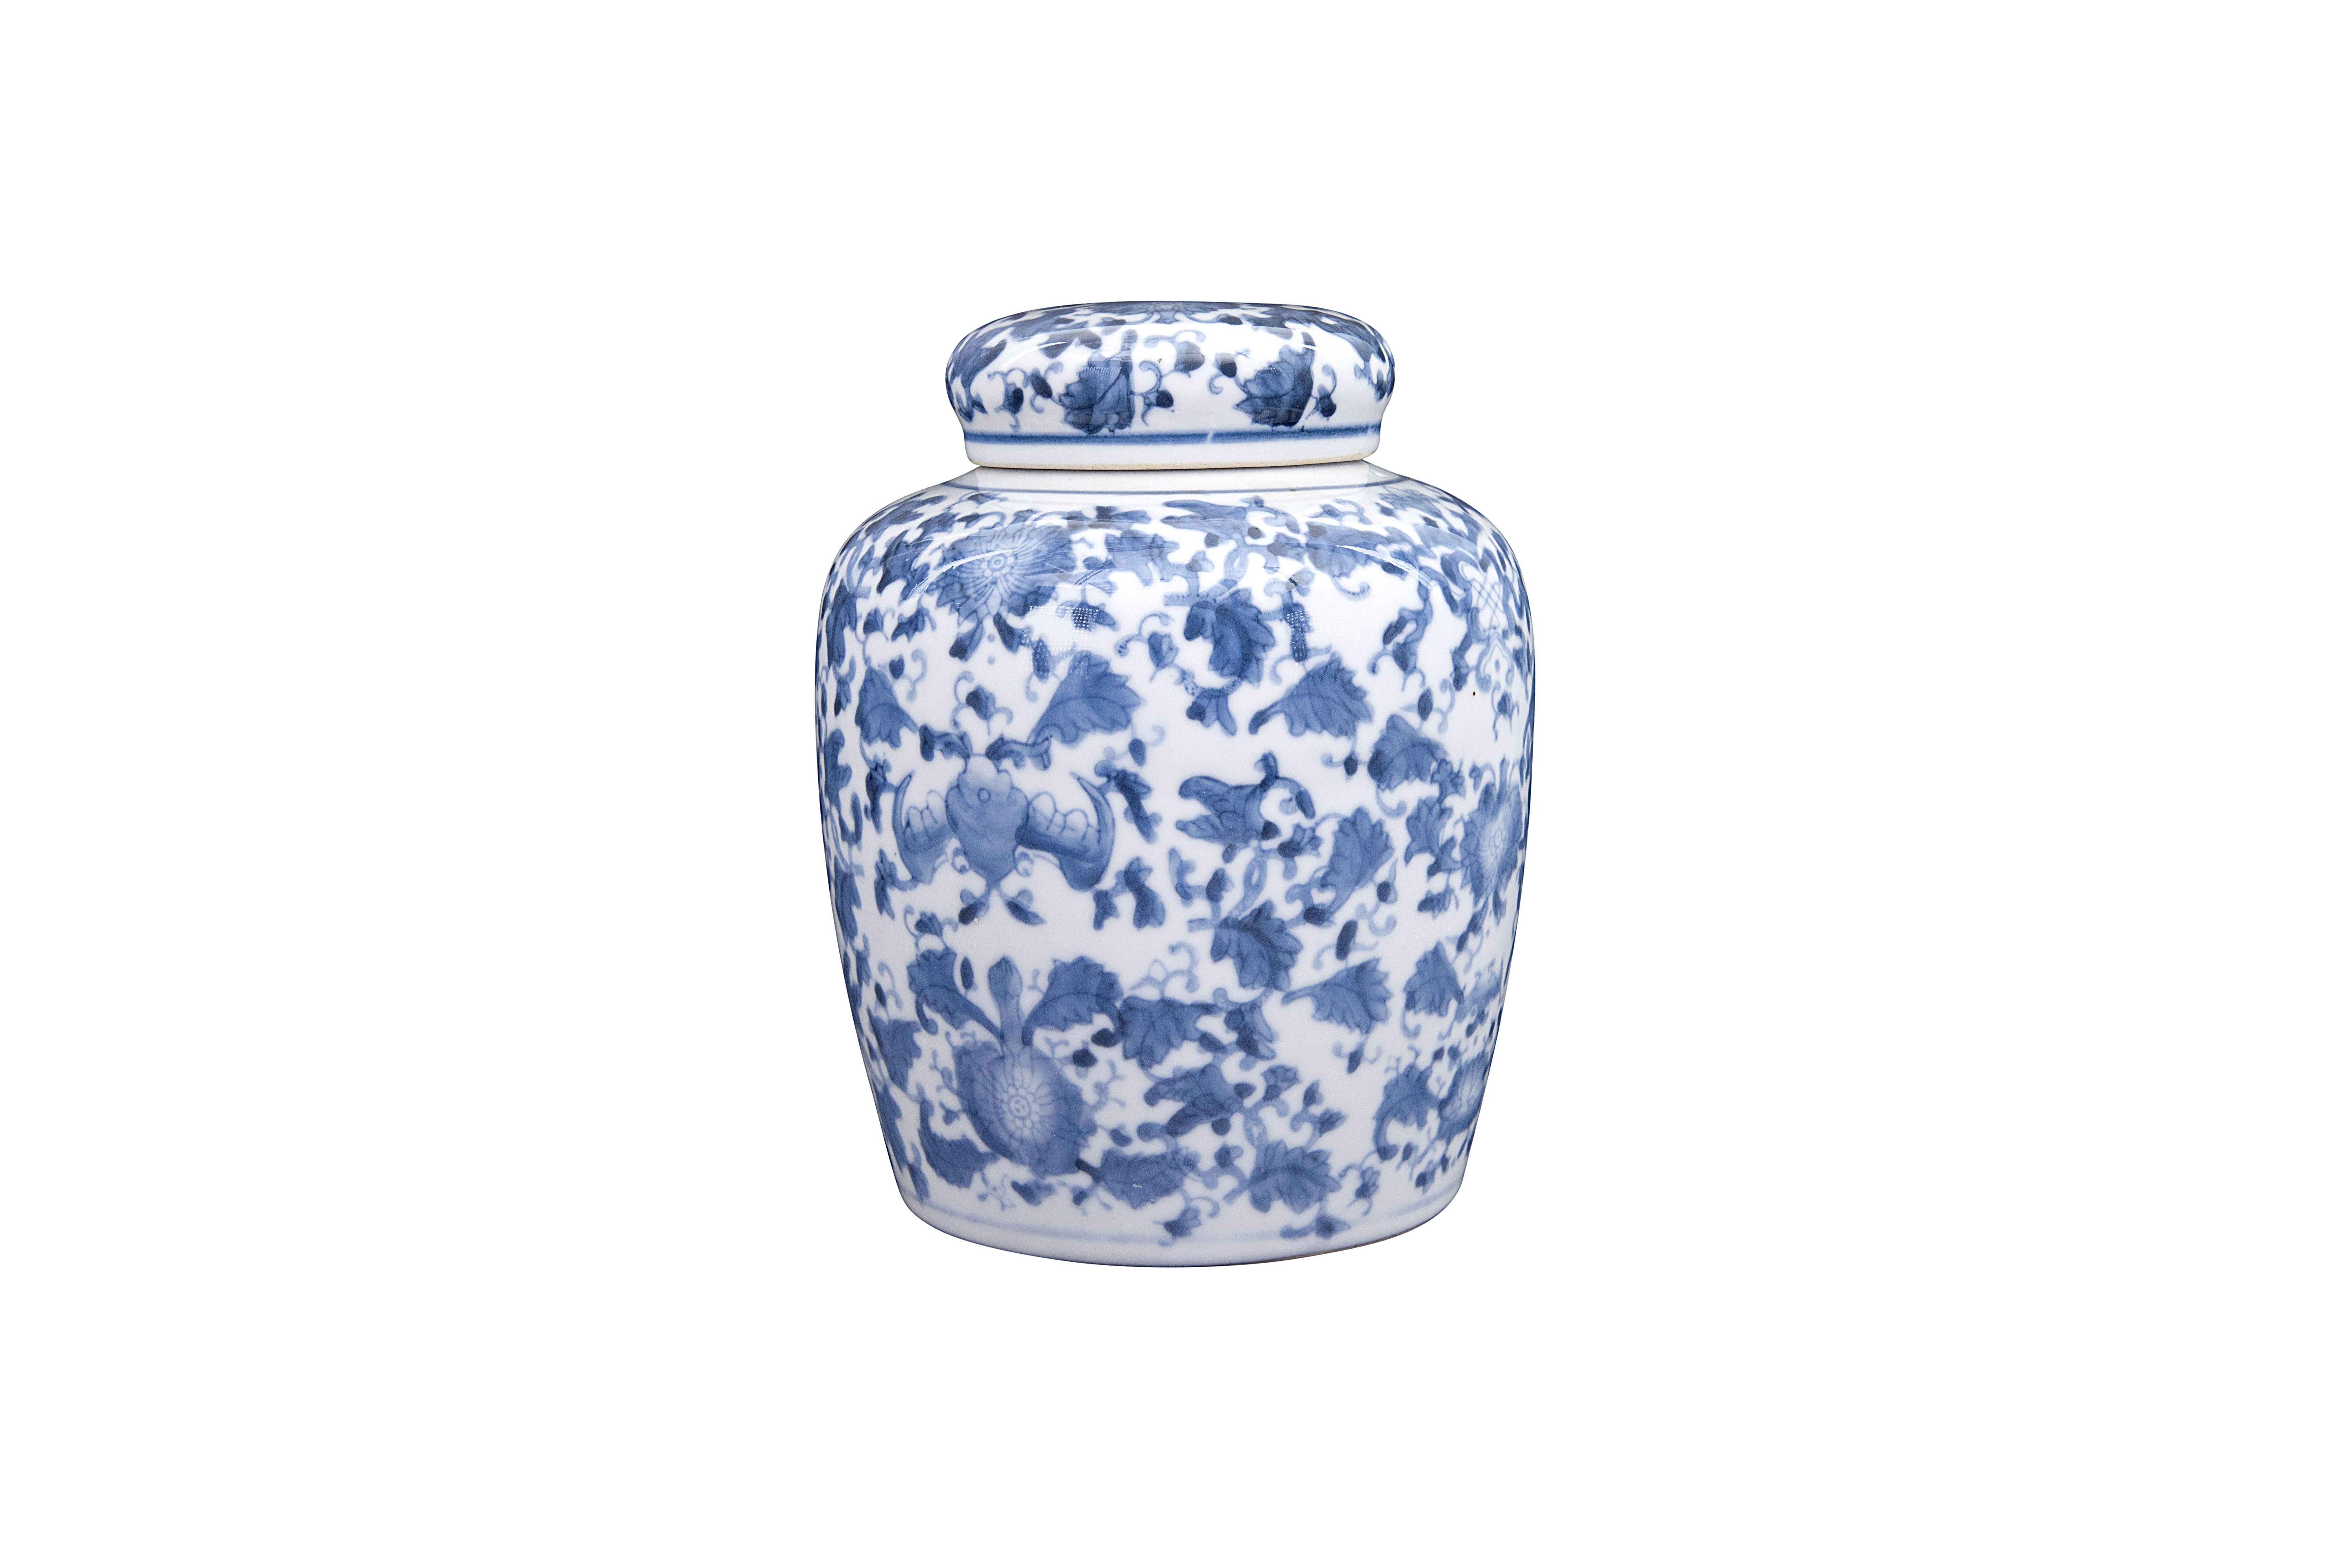 Decorative Ceramic Ginger Jar with Lid, Blue & White - Nomad Home